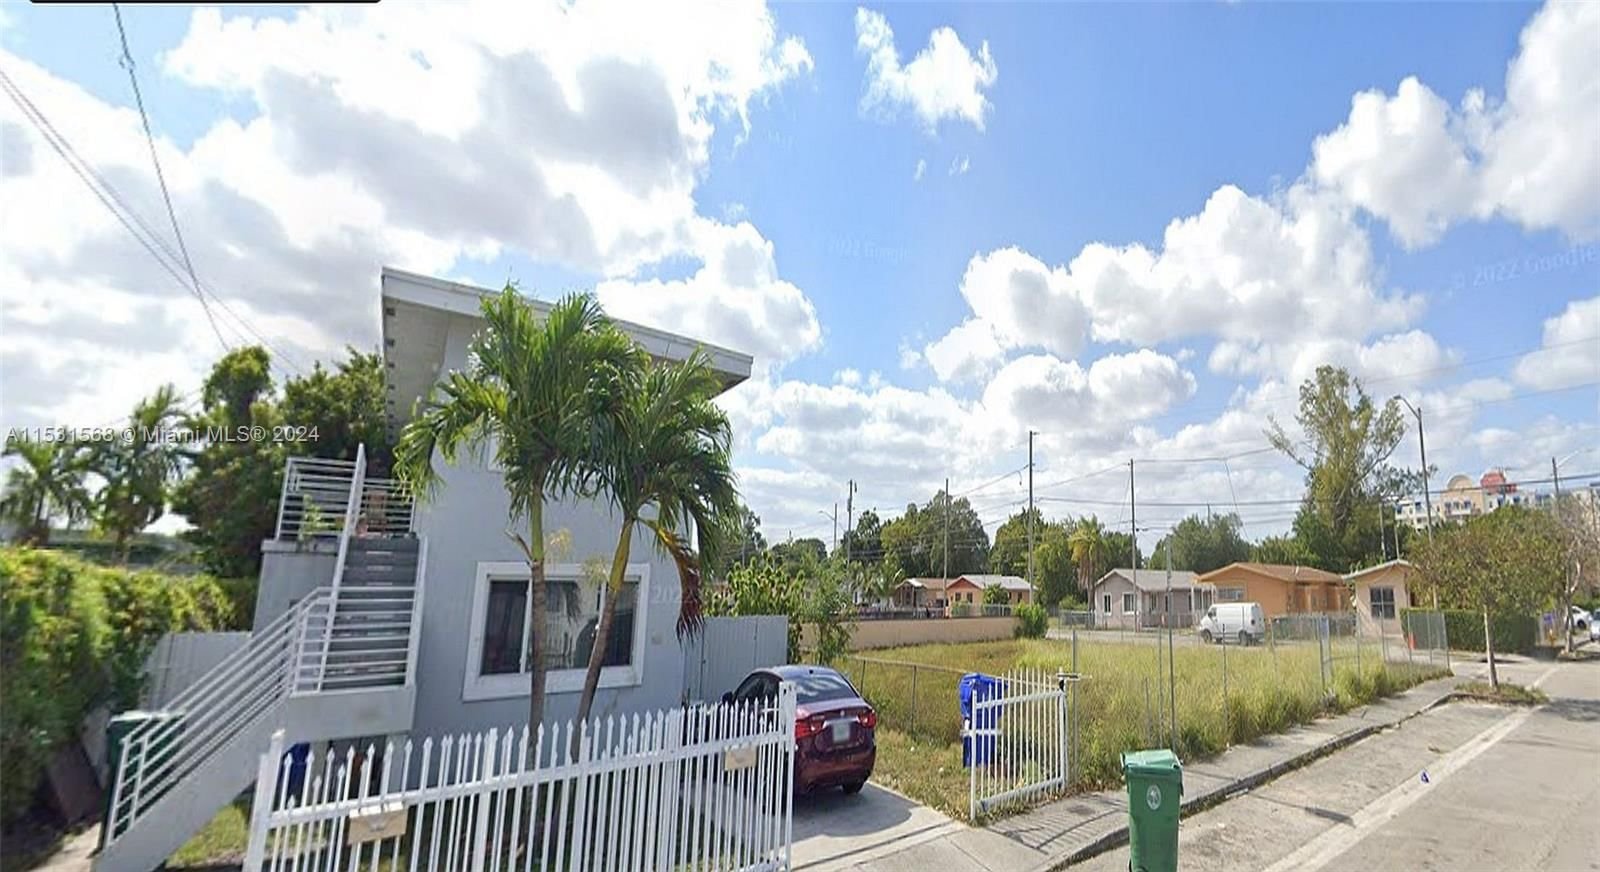 Real estate property located at 5030 14th Ave, Miami-Dade County, FAIRHAVEN GARDENS, Miami, FL